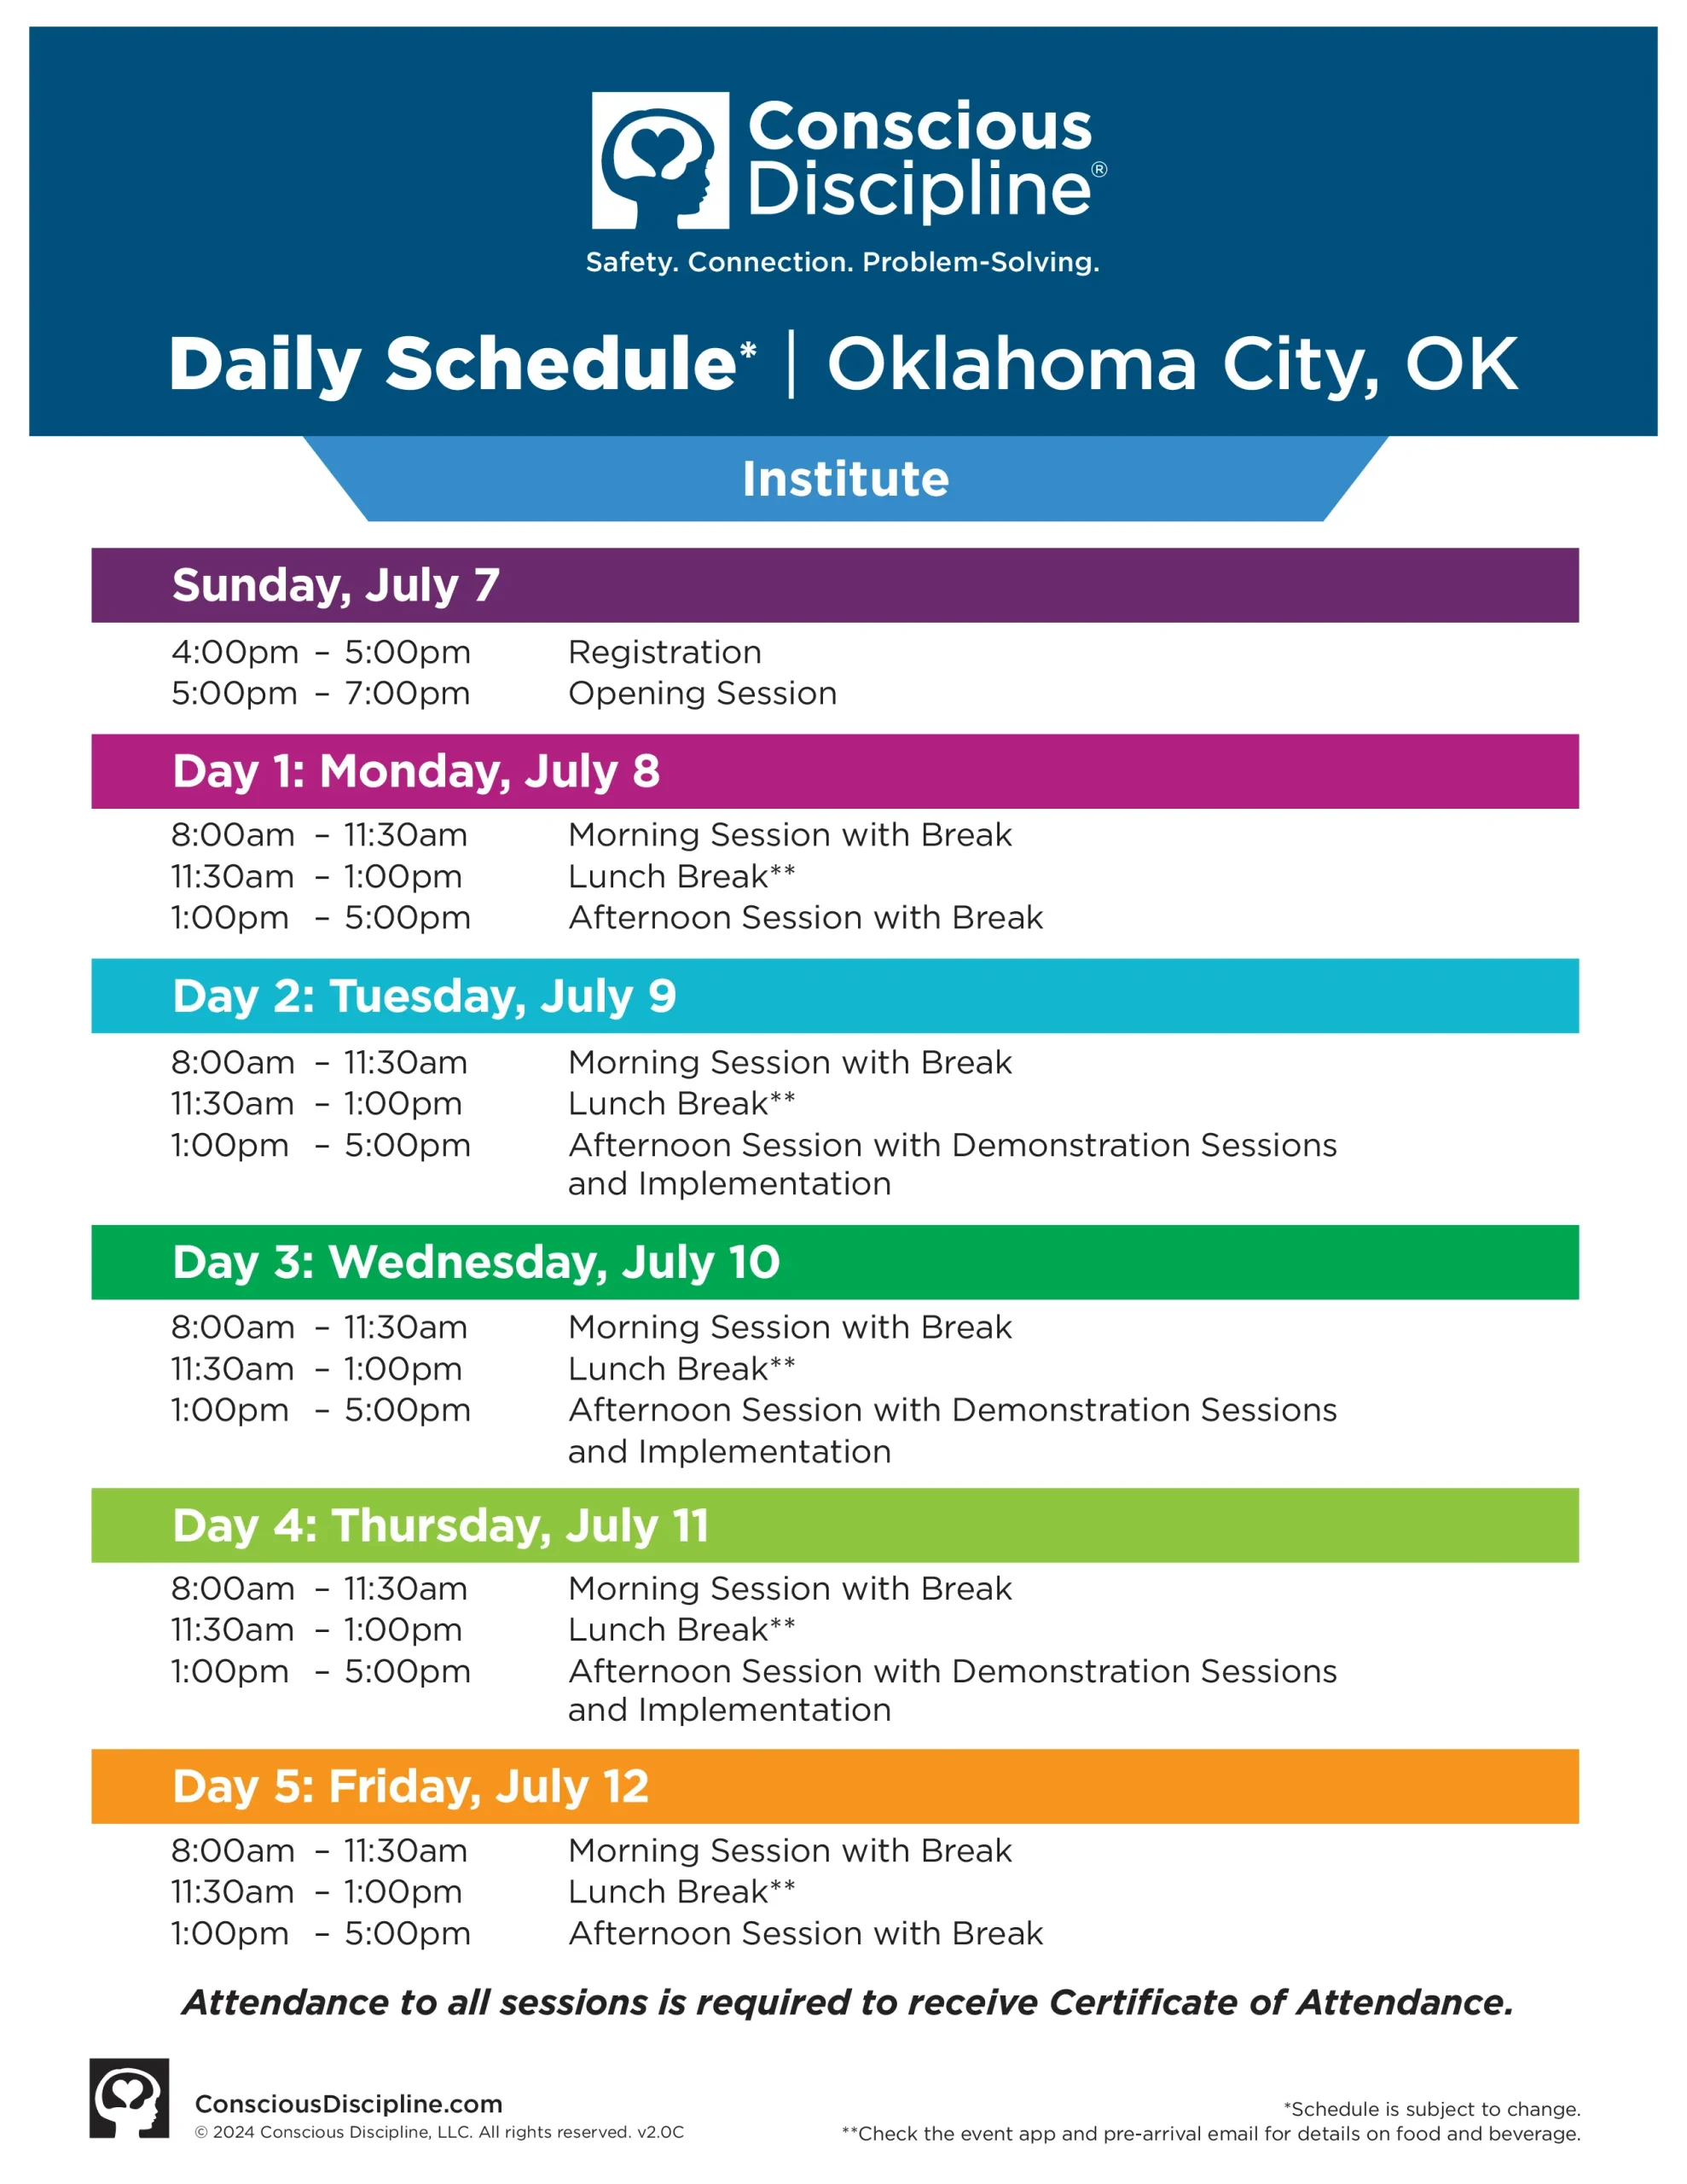 oklahoma event schedule